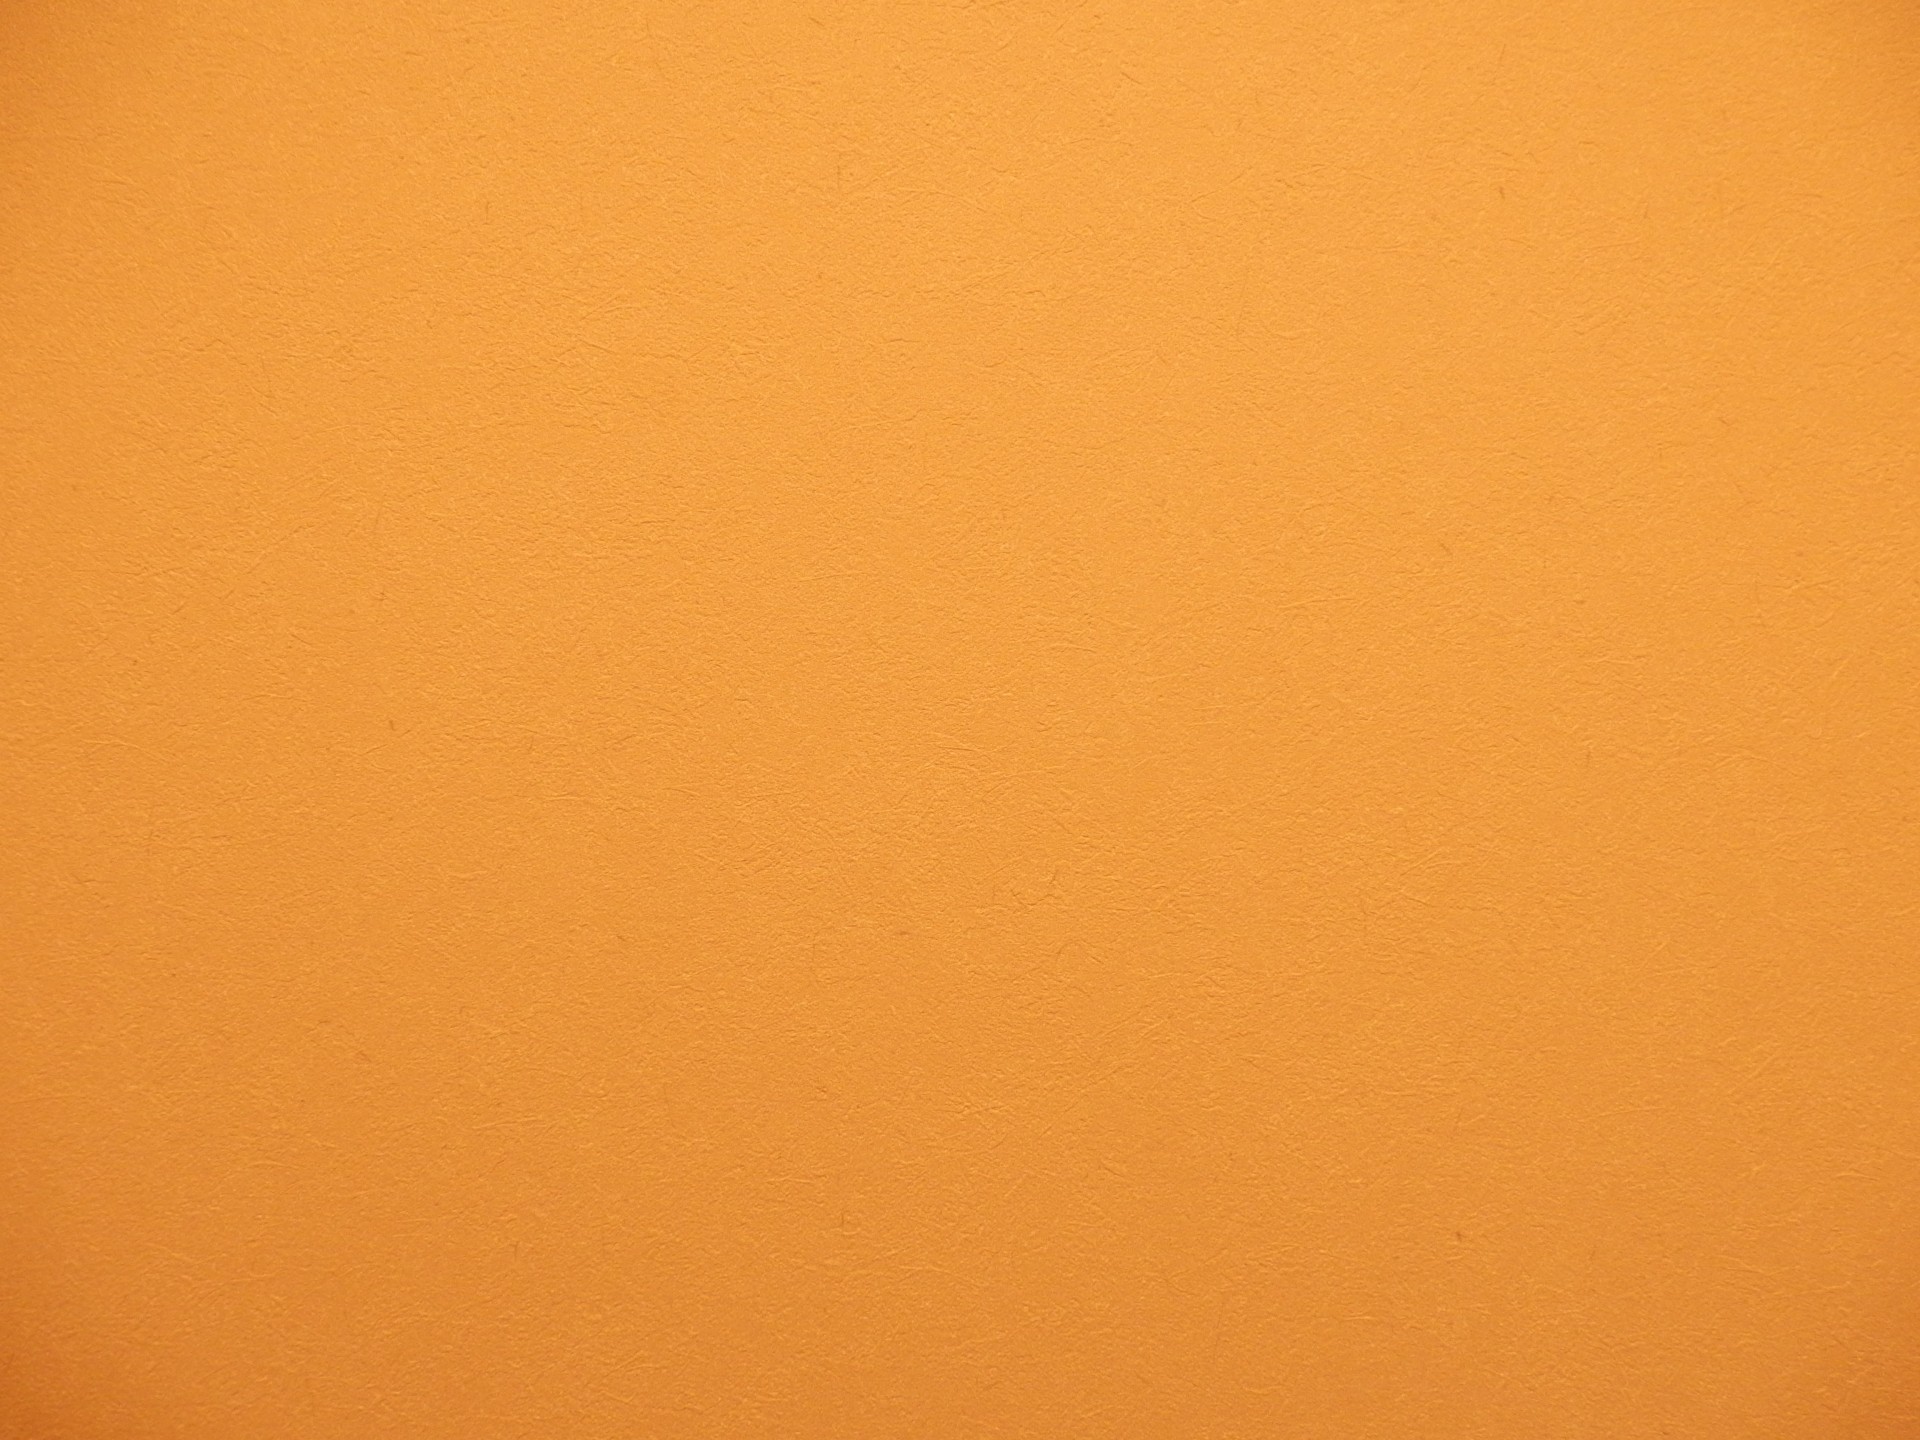 Orange Wall Texture Free Stock Photo - Public Domain Pictures